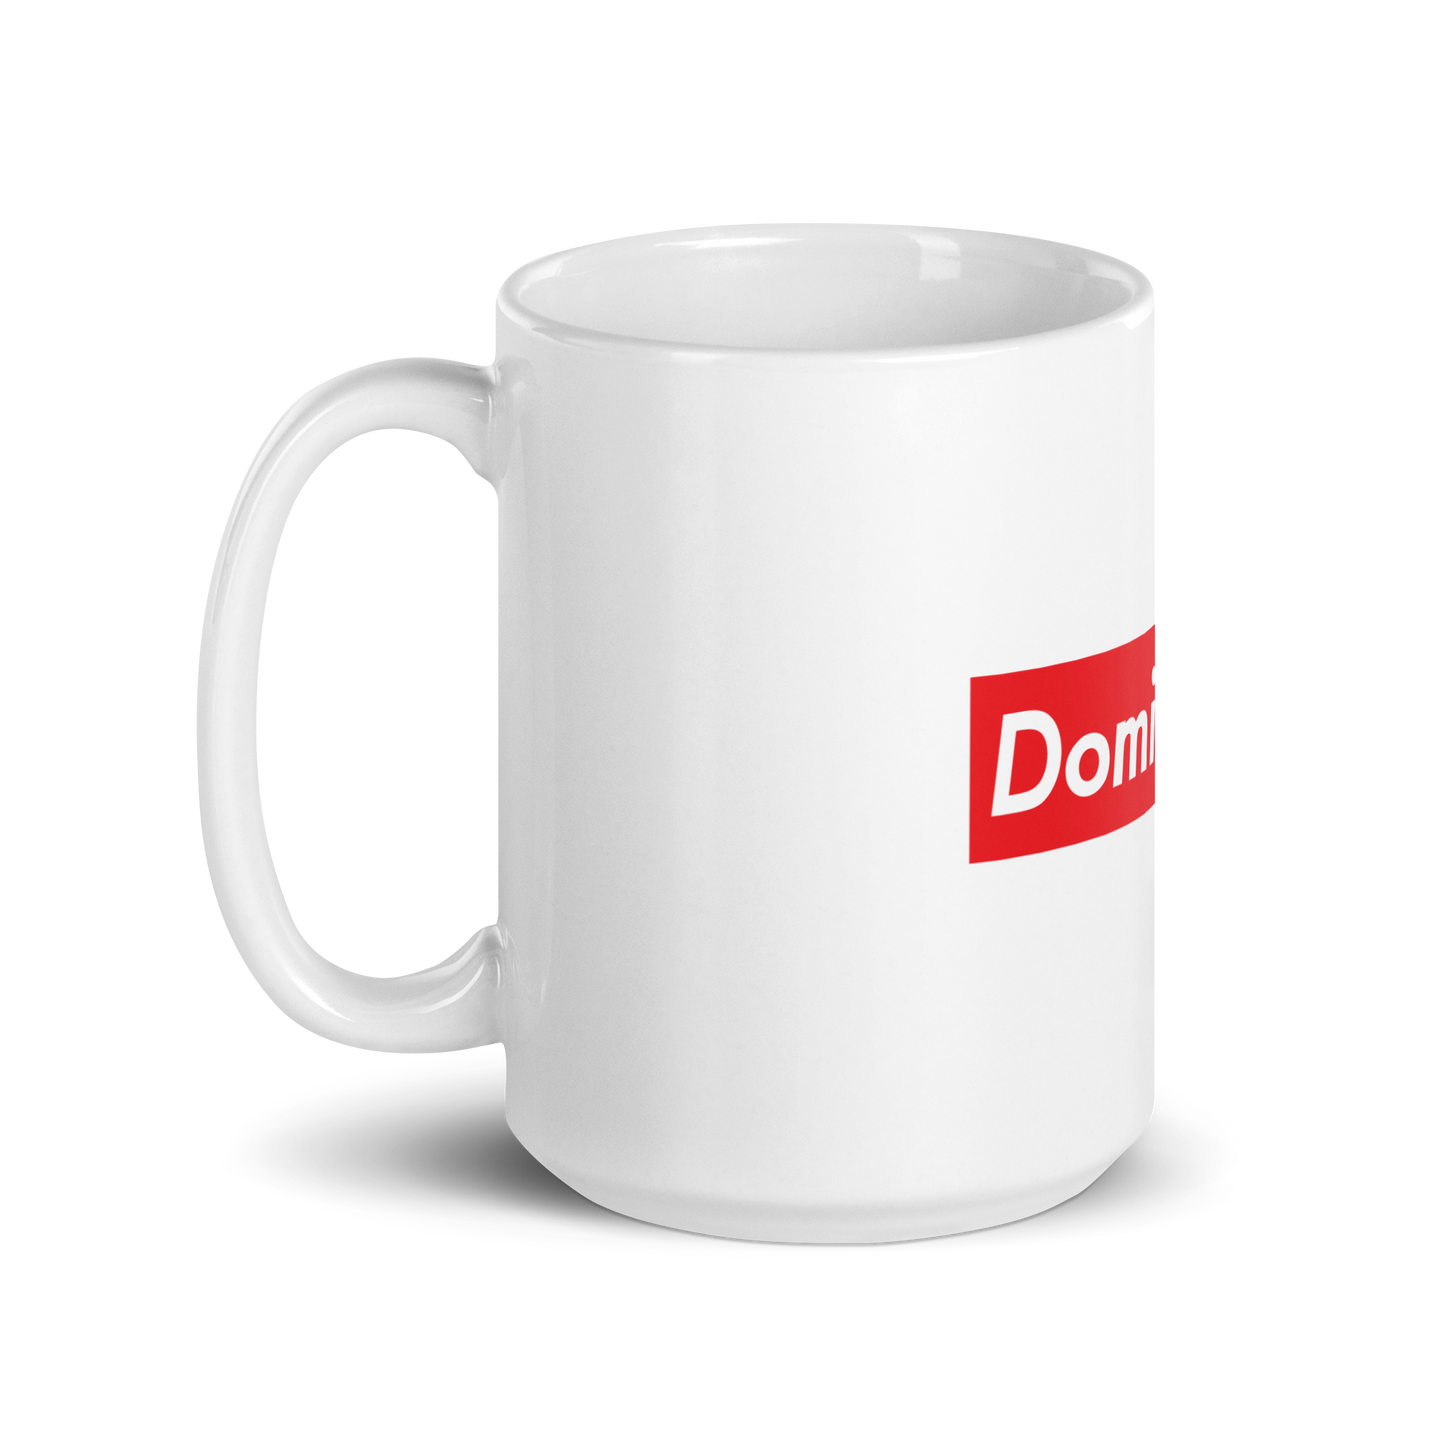 Dominicano Mug